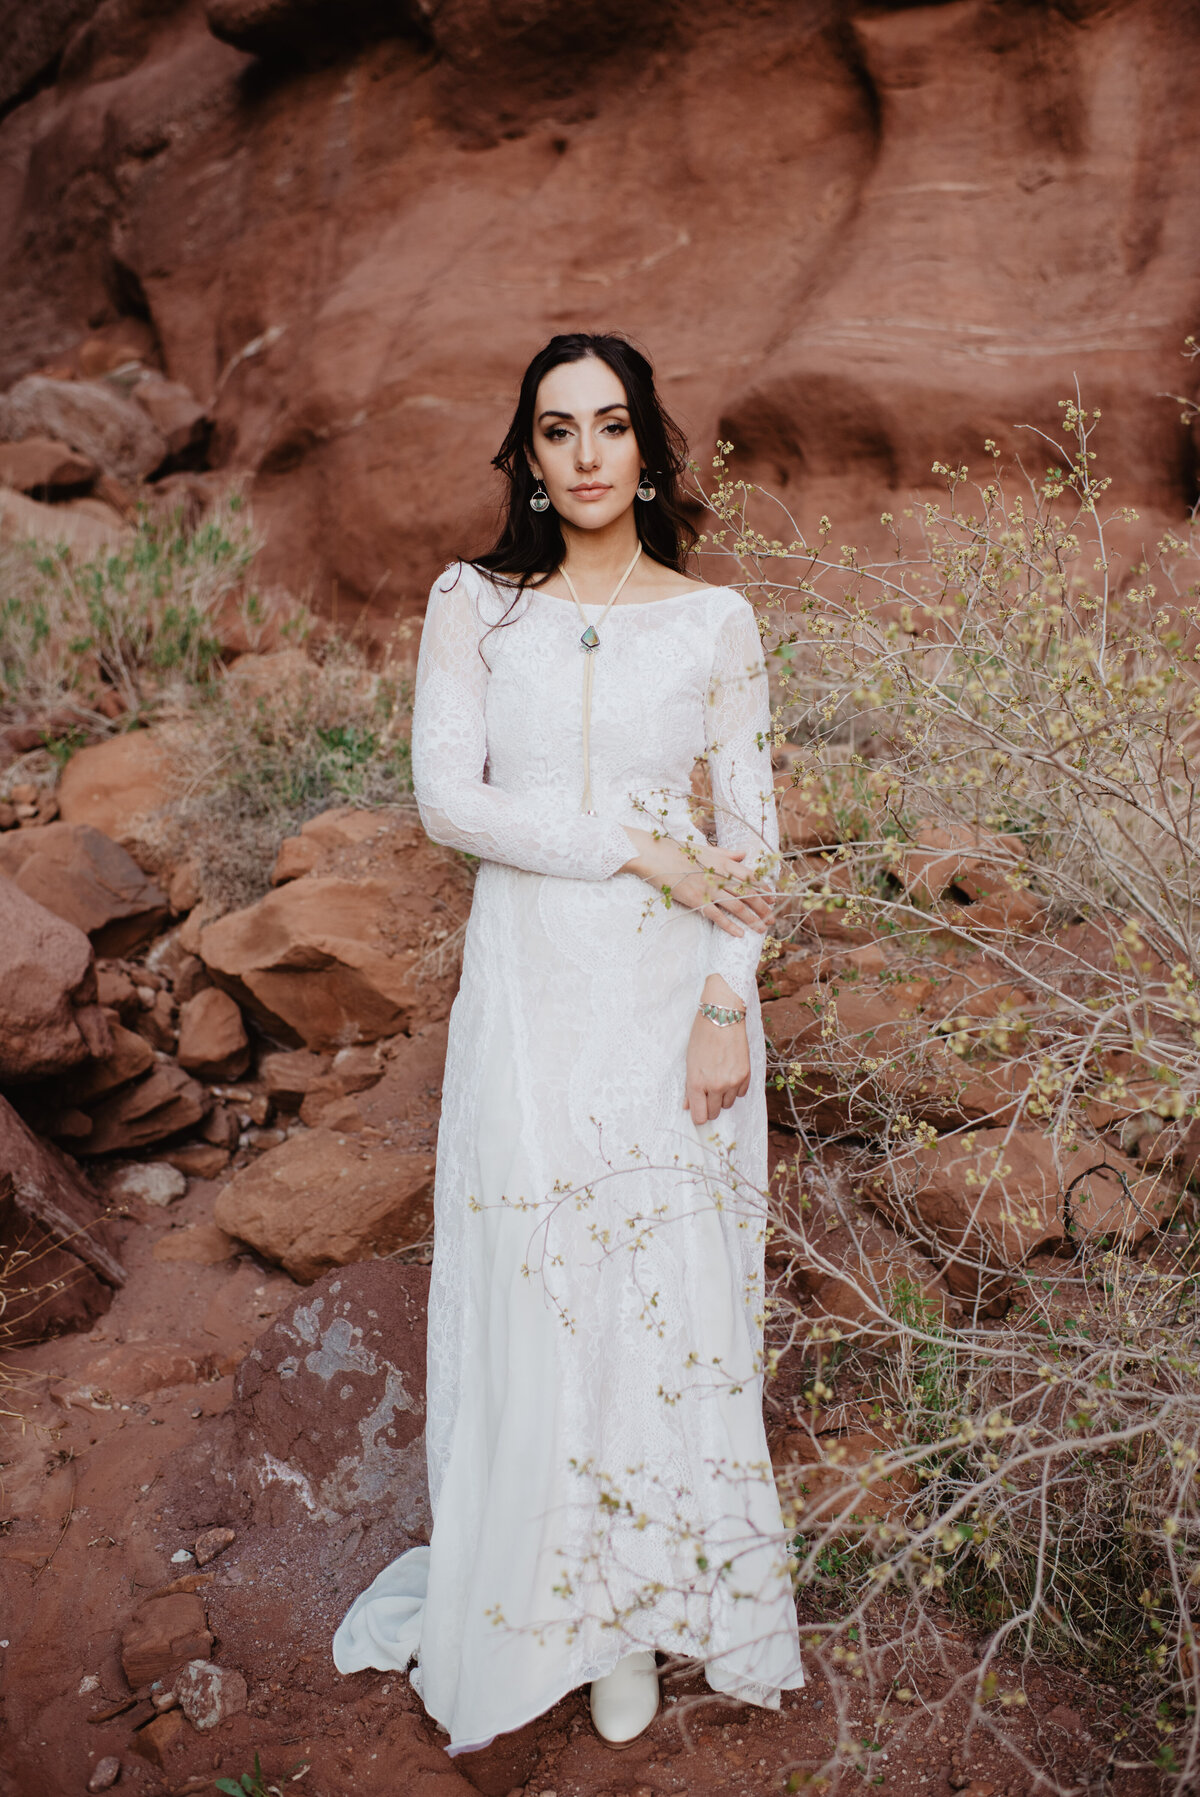 Utah Elopement Photographer captures outdoor bridal portraits